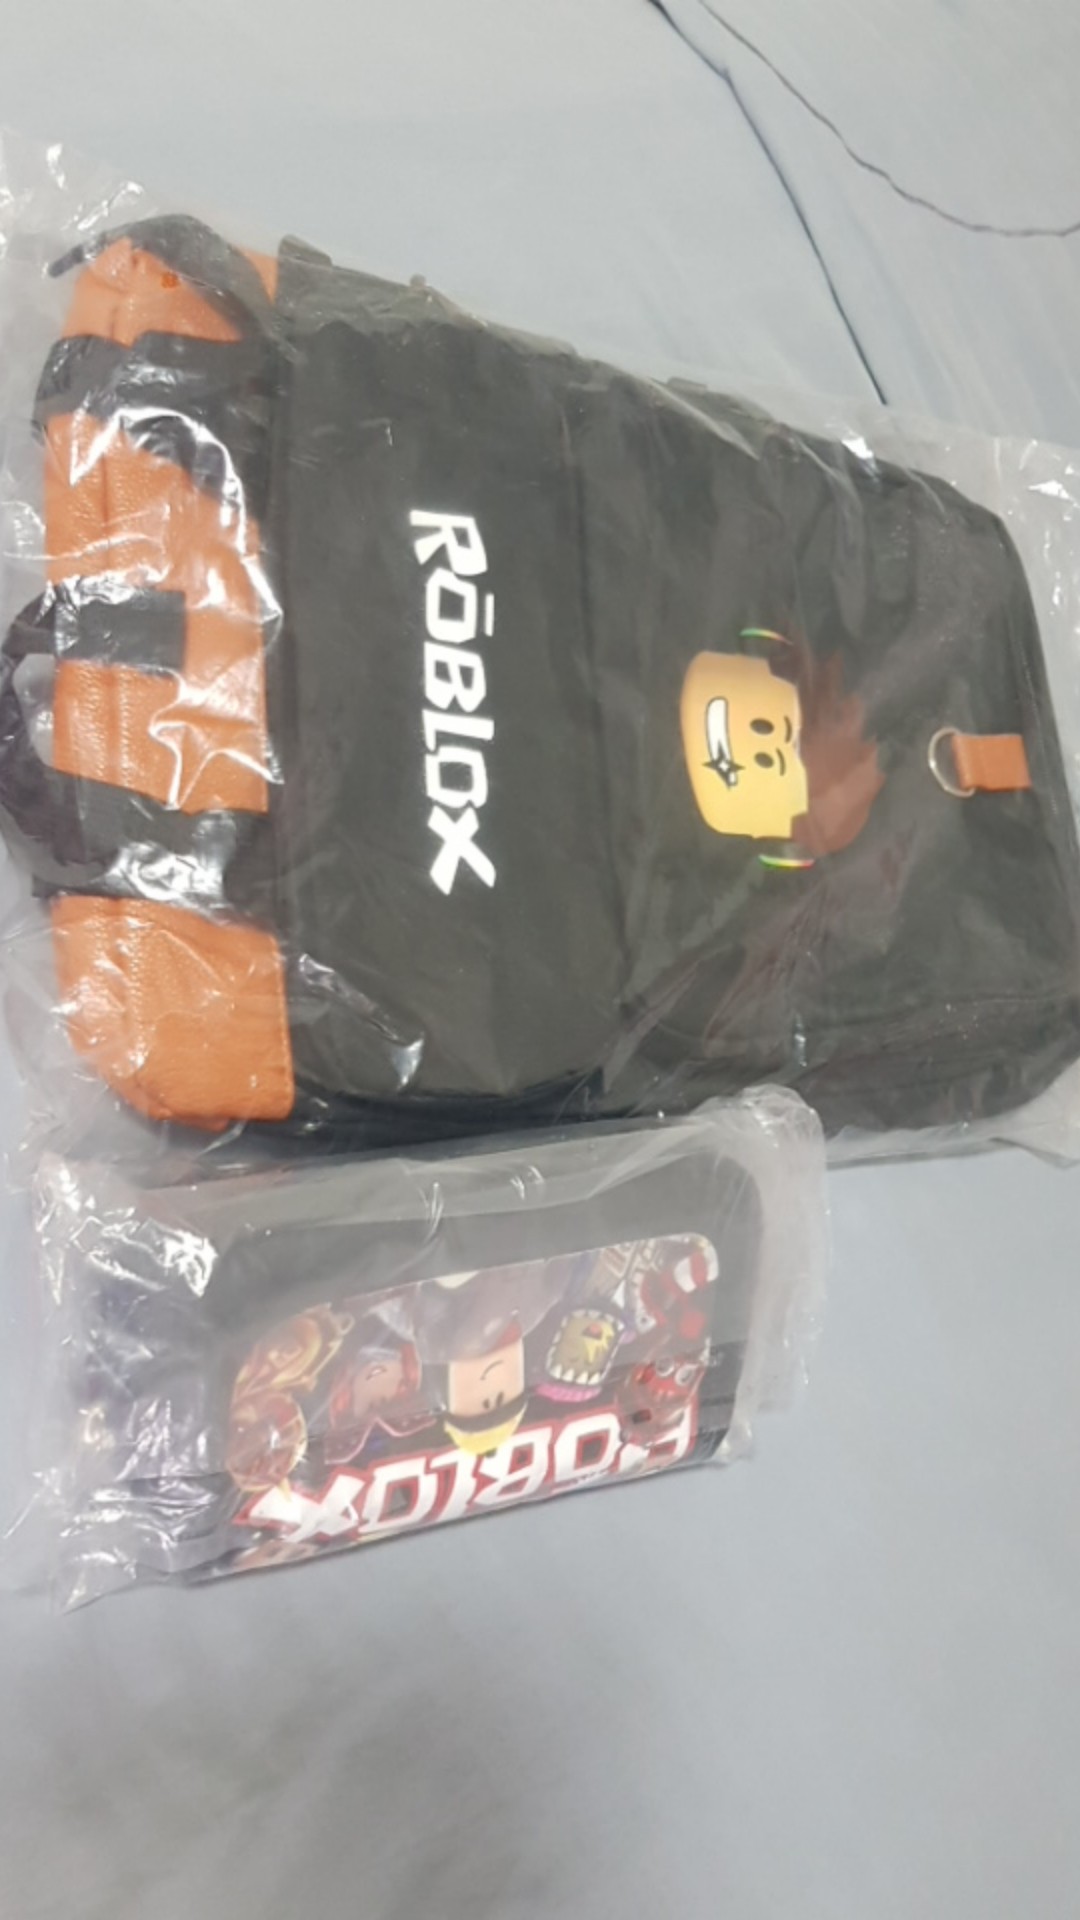 Roblox Primary School Bag Roblox School Backpack Roblox Bag Shopee Singapore - original supreme denim with black bag roblox